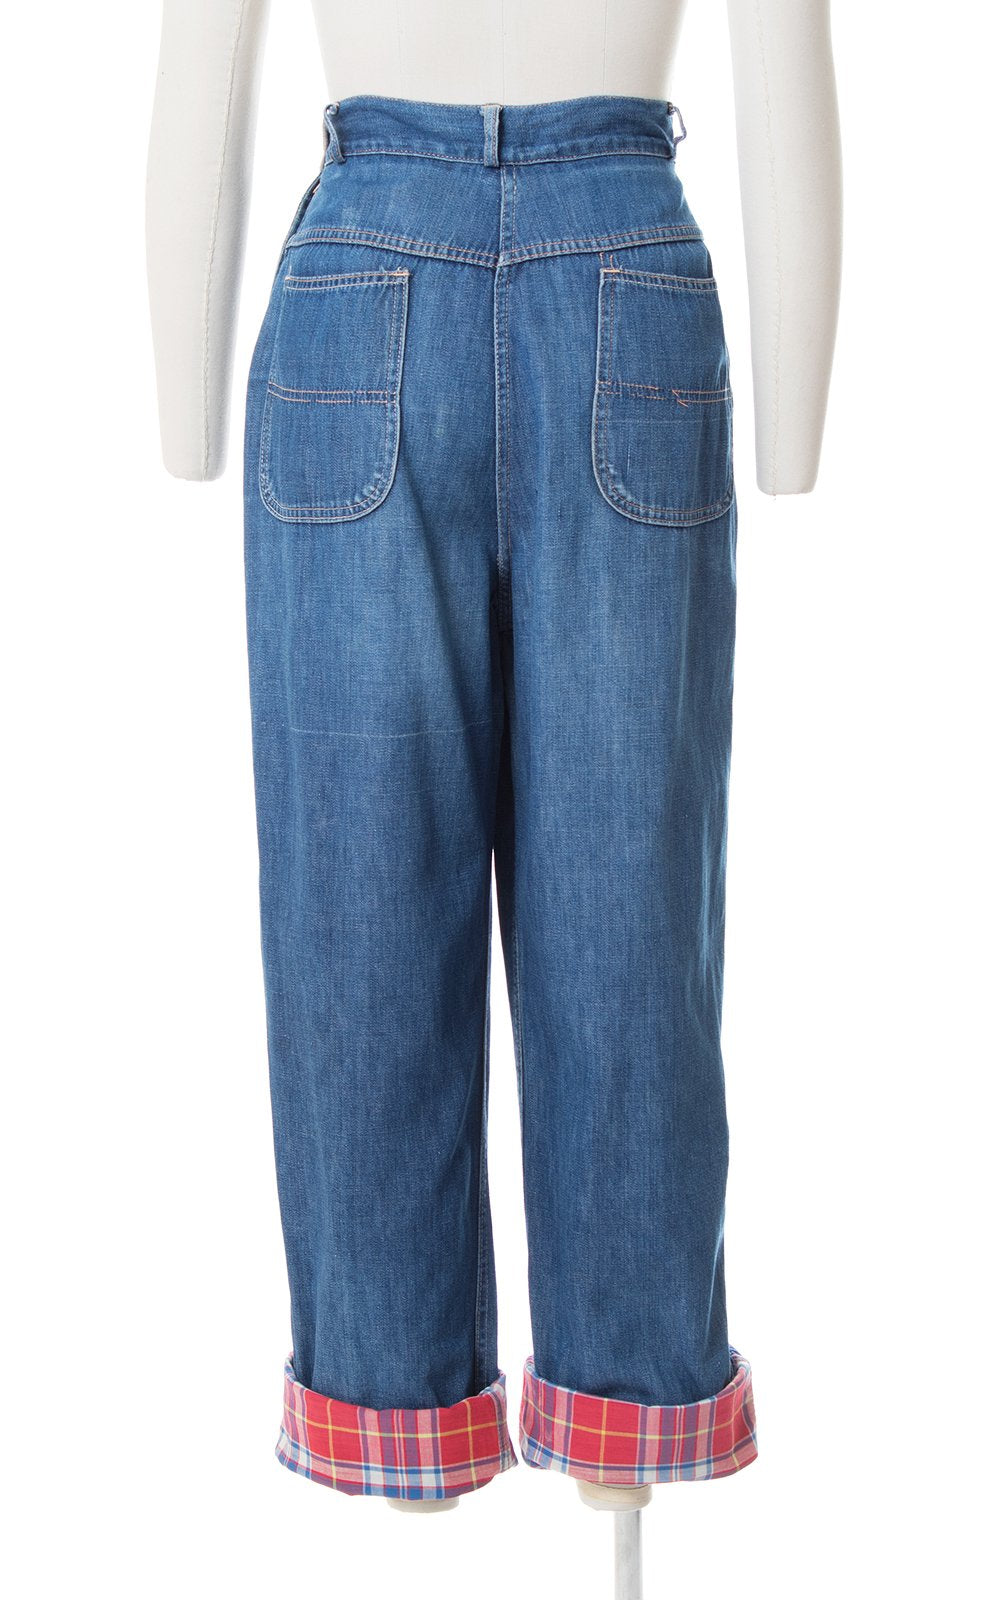 1950s Plaid Cuff Medium-Wash Denim Jeans